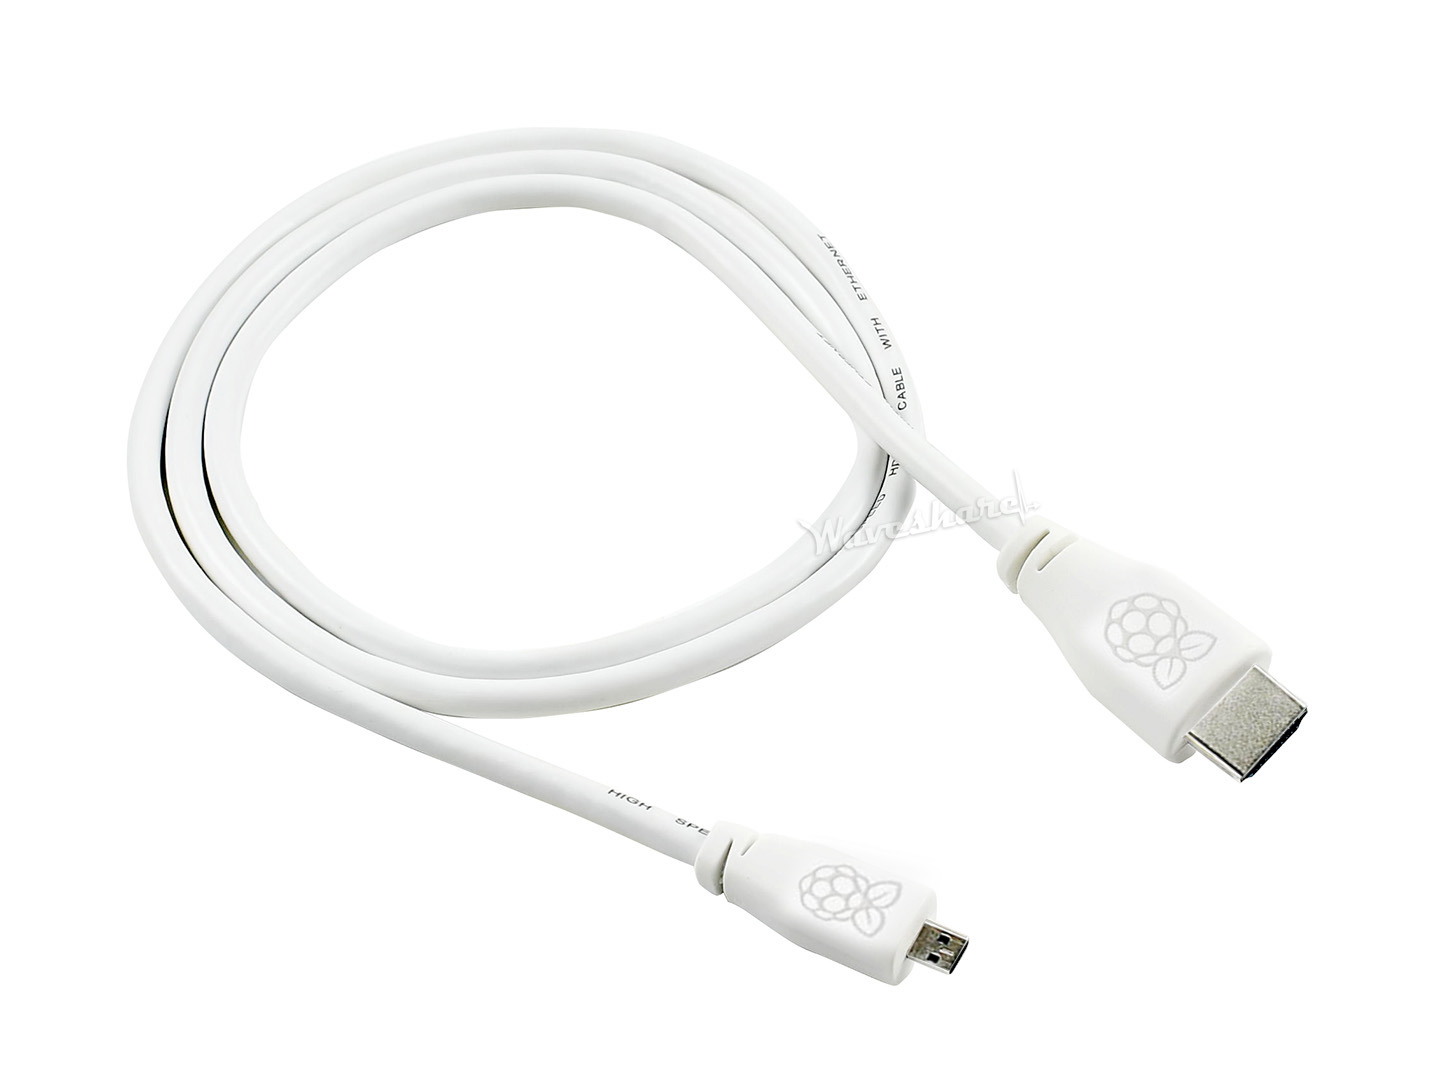 Buy a Micro HDMI® to HDMI® Cable – Raspberry Pi